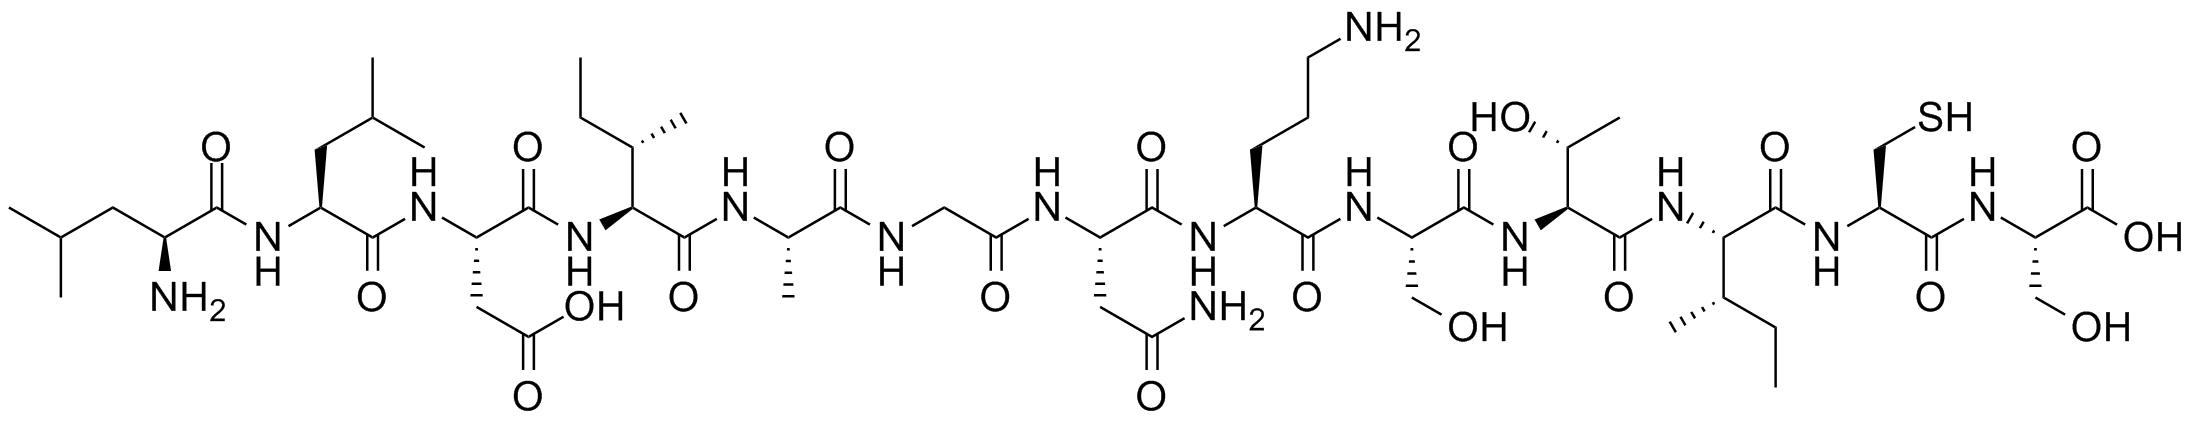 image of the peptide LLDIAGNOSTICS